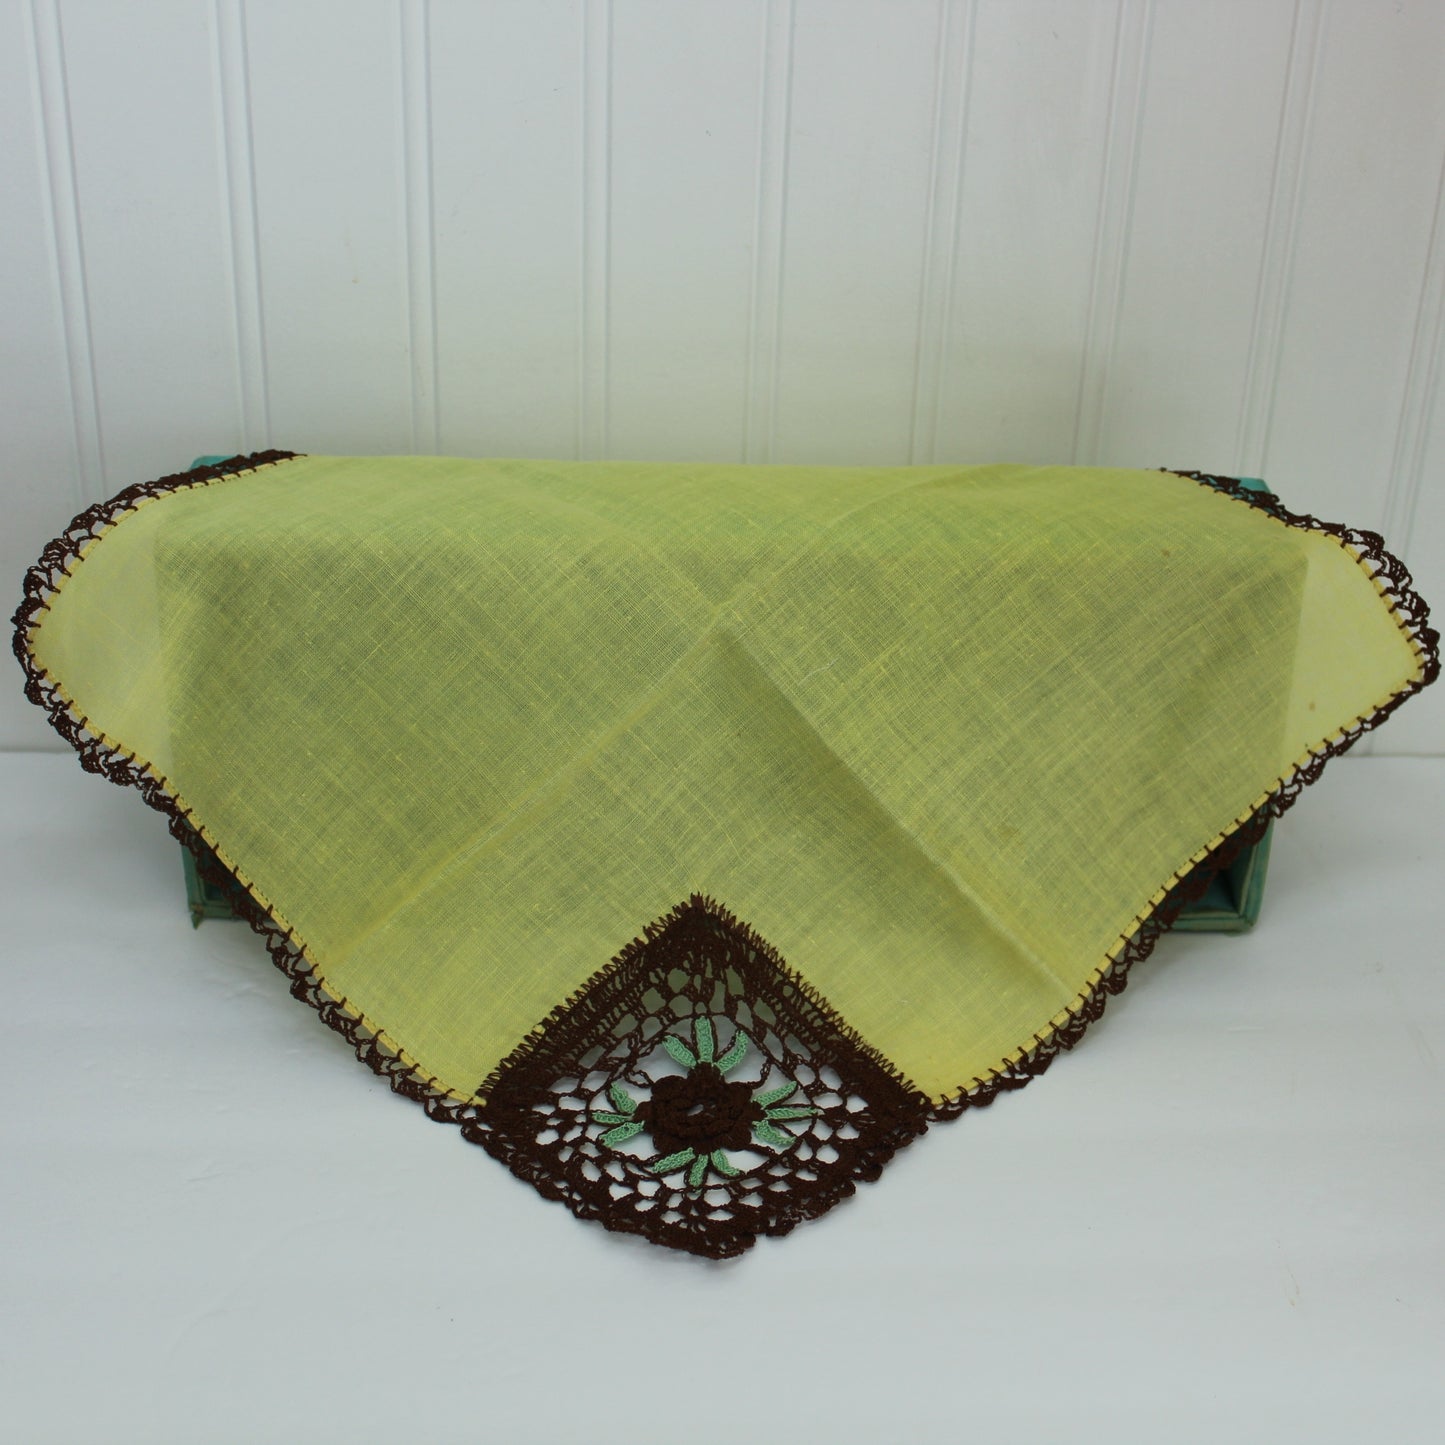 Crochet Corner Handkerchief Yellow Brown Aqua Flower Hand Edging DIY Clothing Crafts lovely colors in this unusual hanky